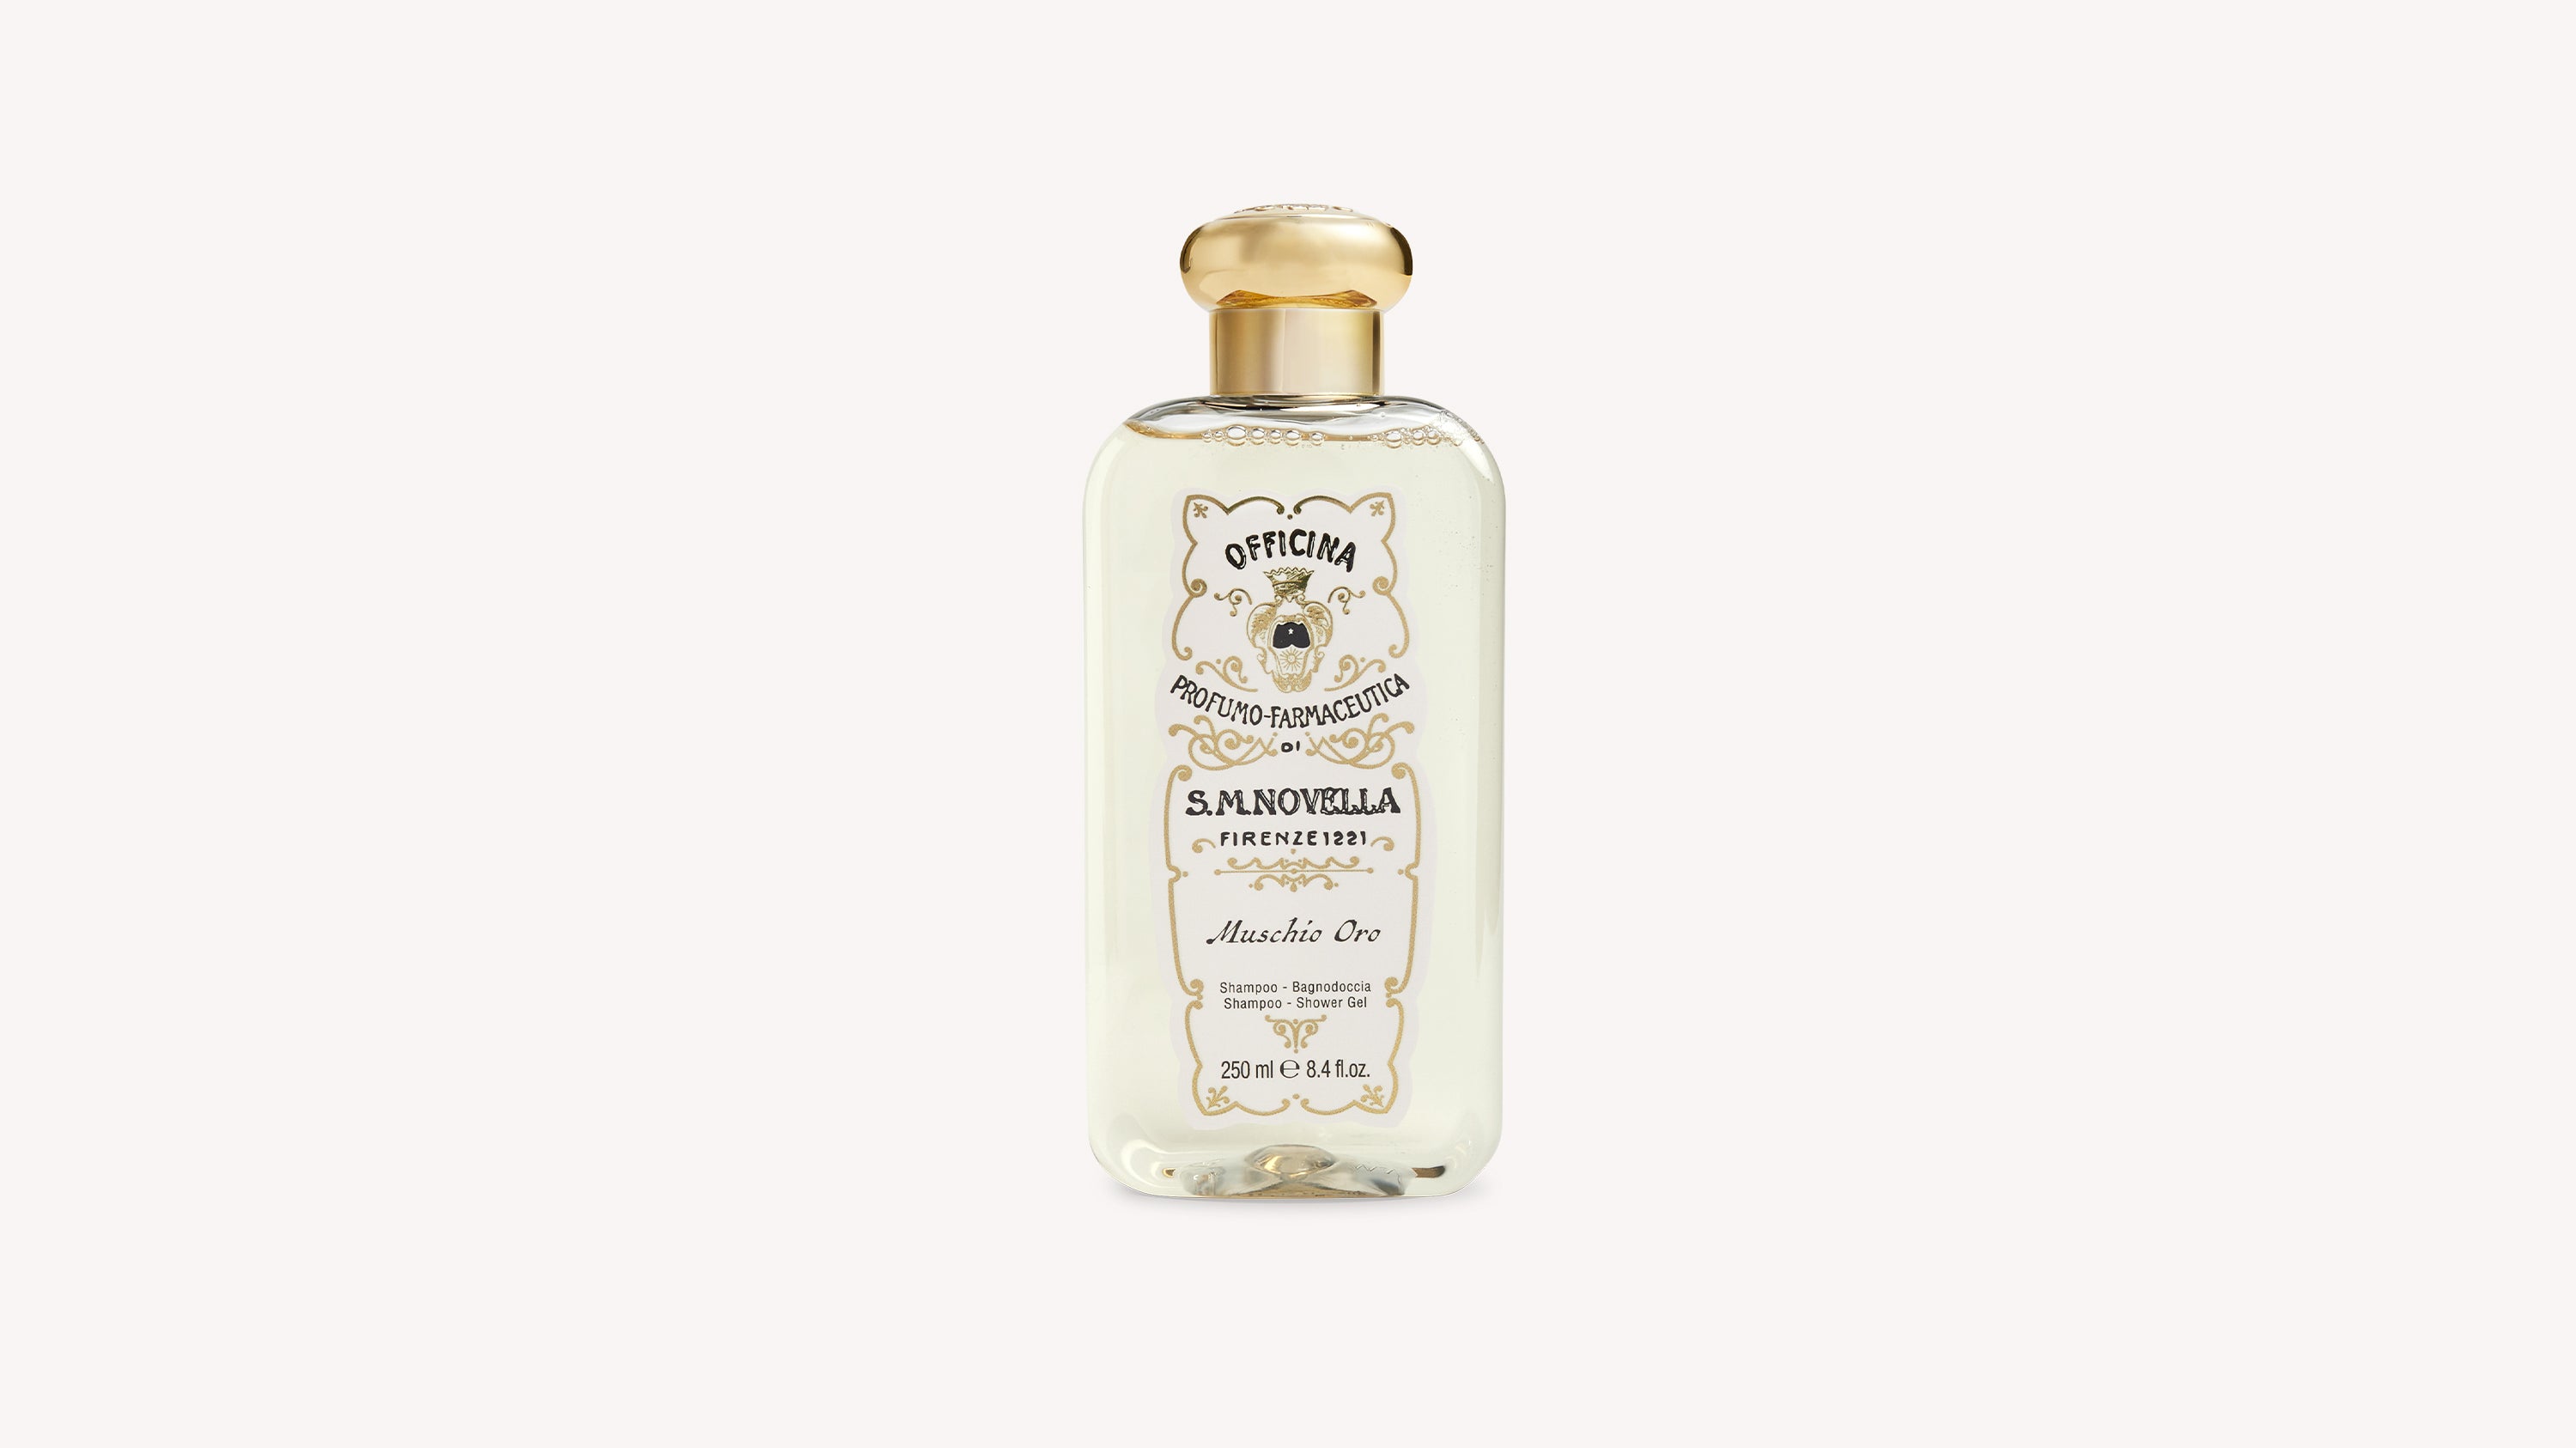 Muschio Oro Shampoo And Shower Gel Body Care officina-smn-usa-ca.myshopify.com Officina Profumo Farmaceutica di Santa Maria Novella - US